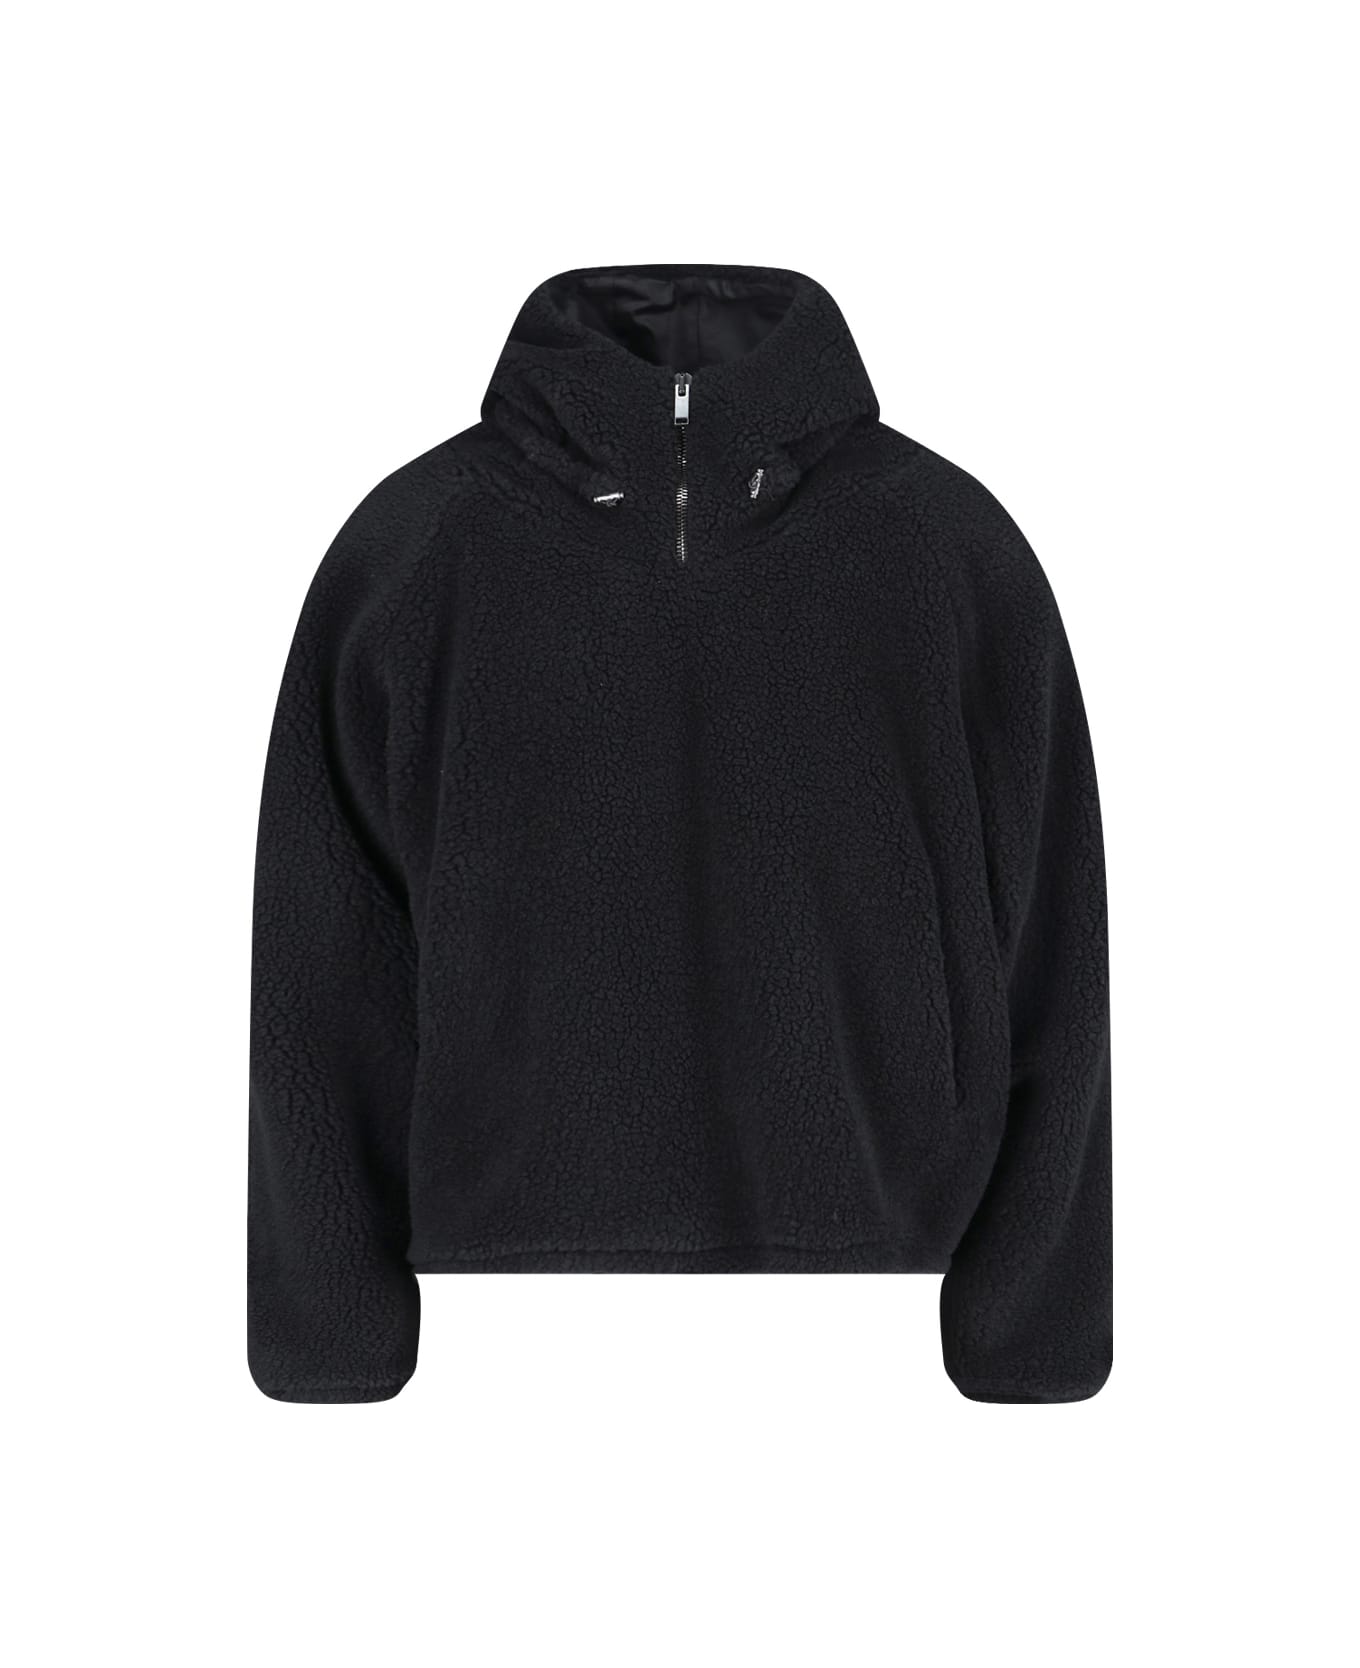 FourTwoFour on Fairfax Sweater - Black